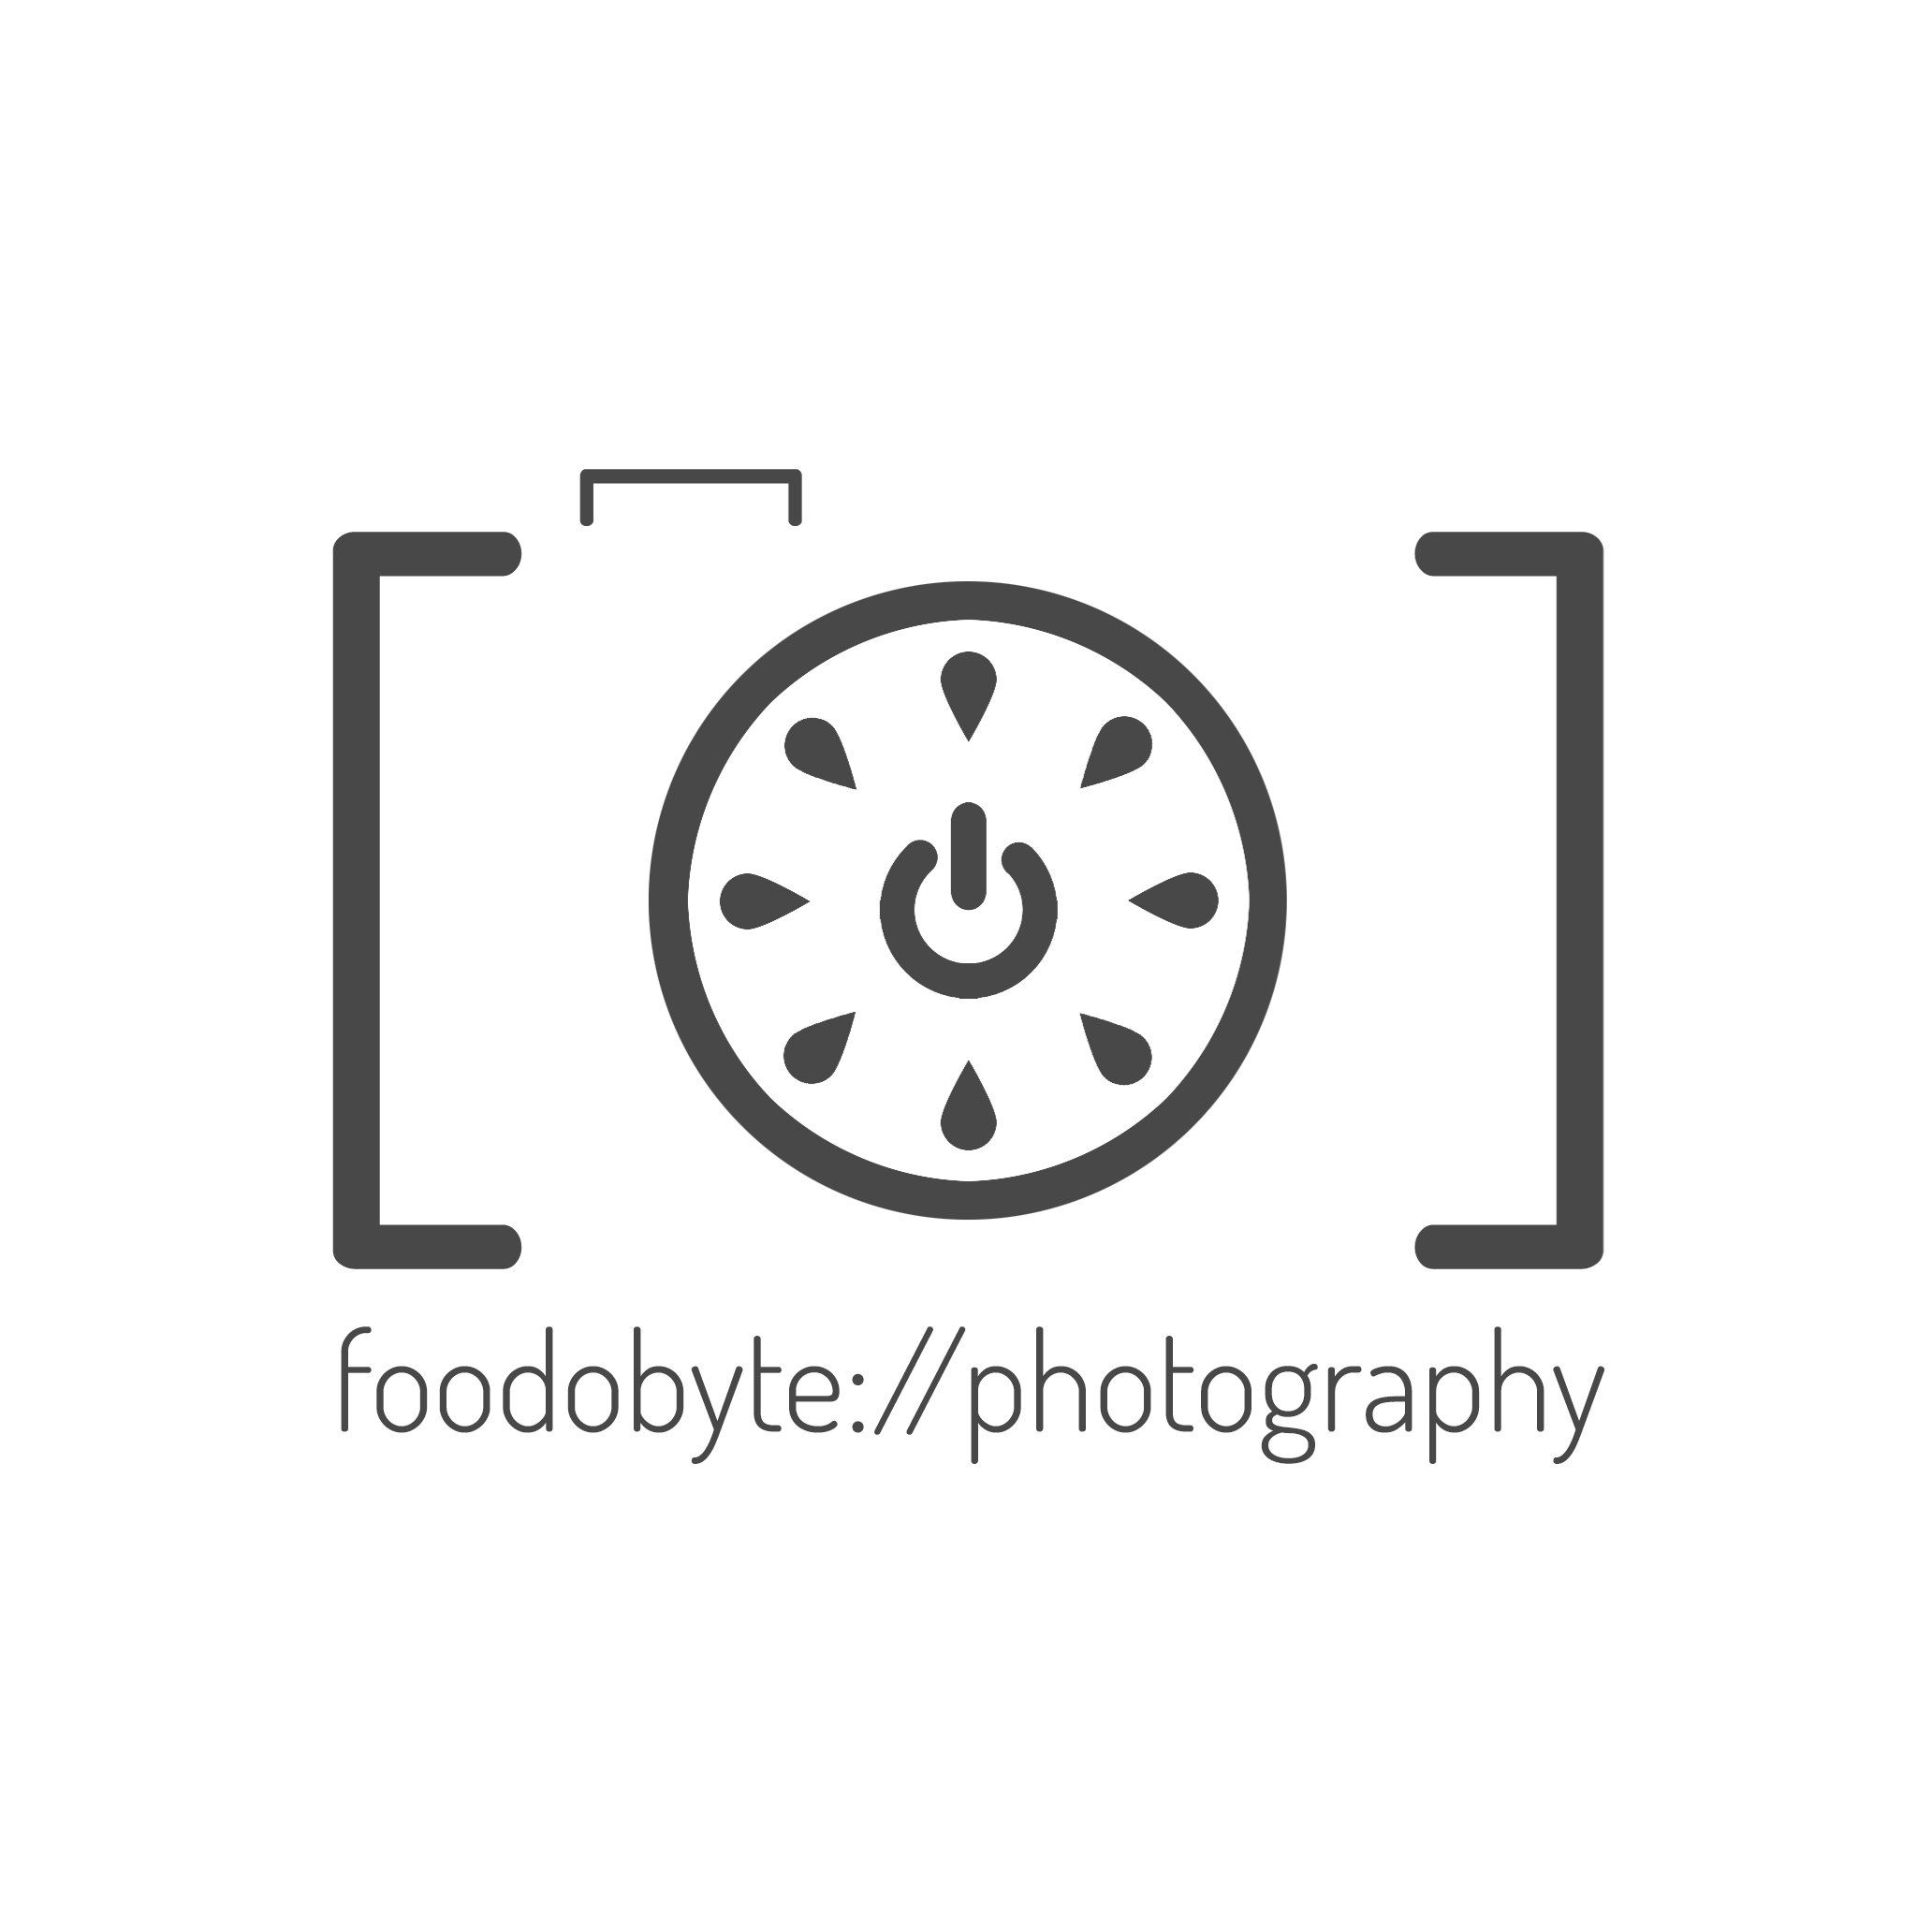 foodobyte photography - circle bg